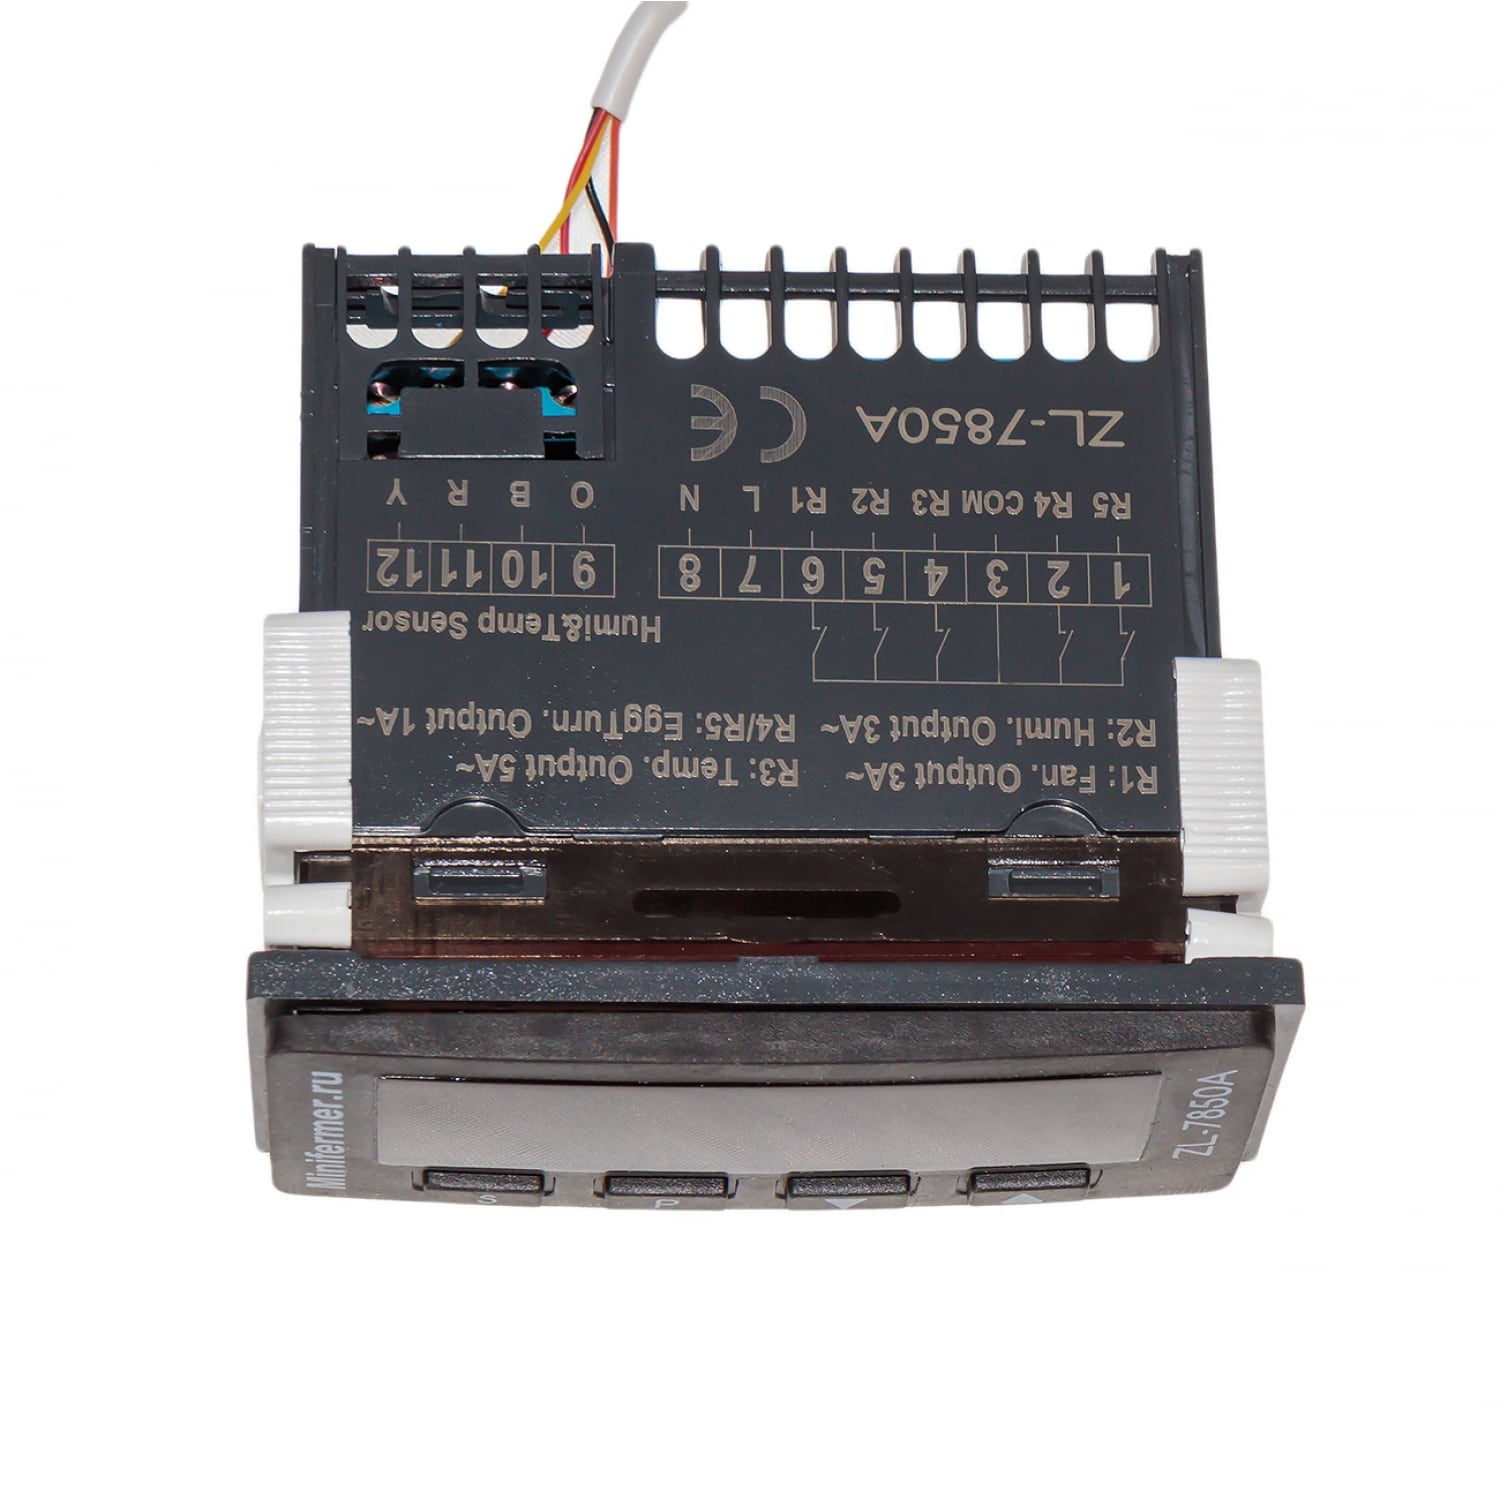 Контроллер LILYTECH ZL-7850А (темп + влажность + 2 таймера)